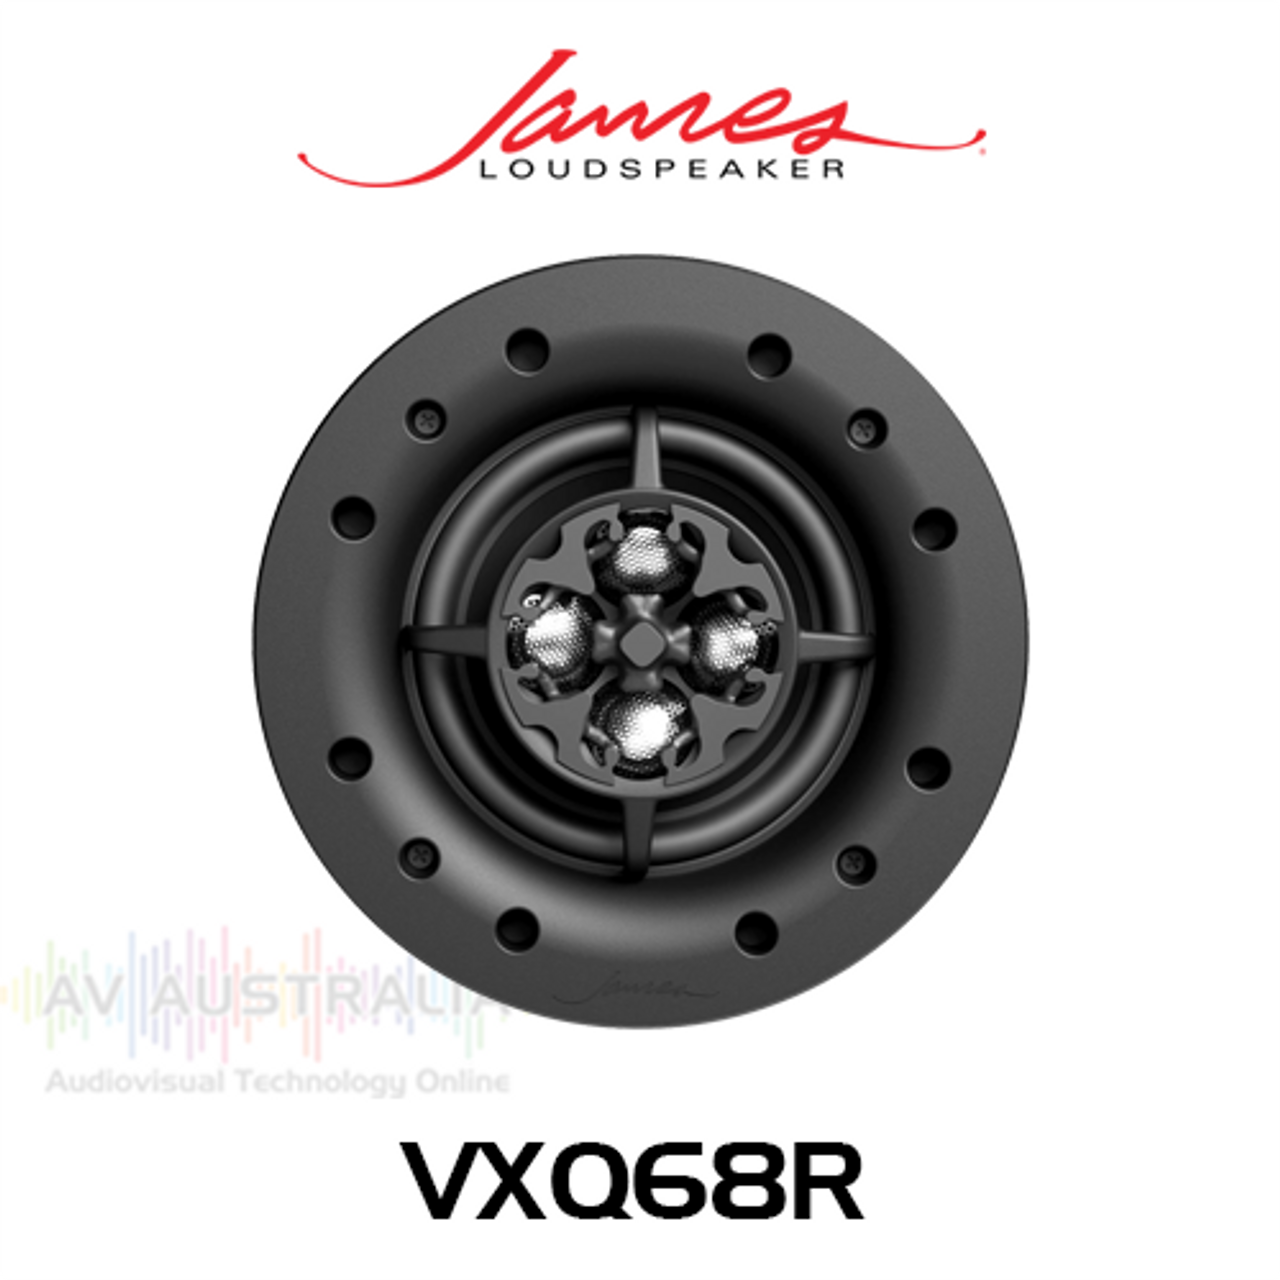 James Loudspeaker VXQ68R 6.5" In-Ceiling Round Speaker (Each)